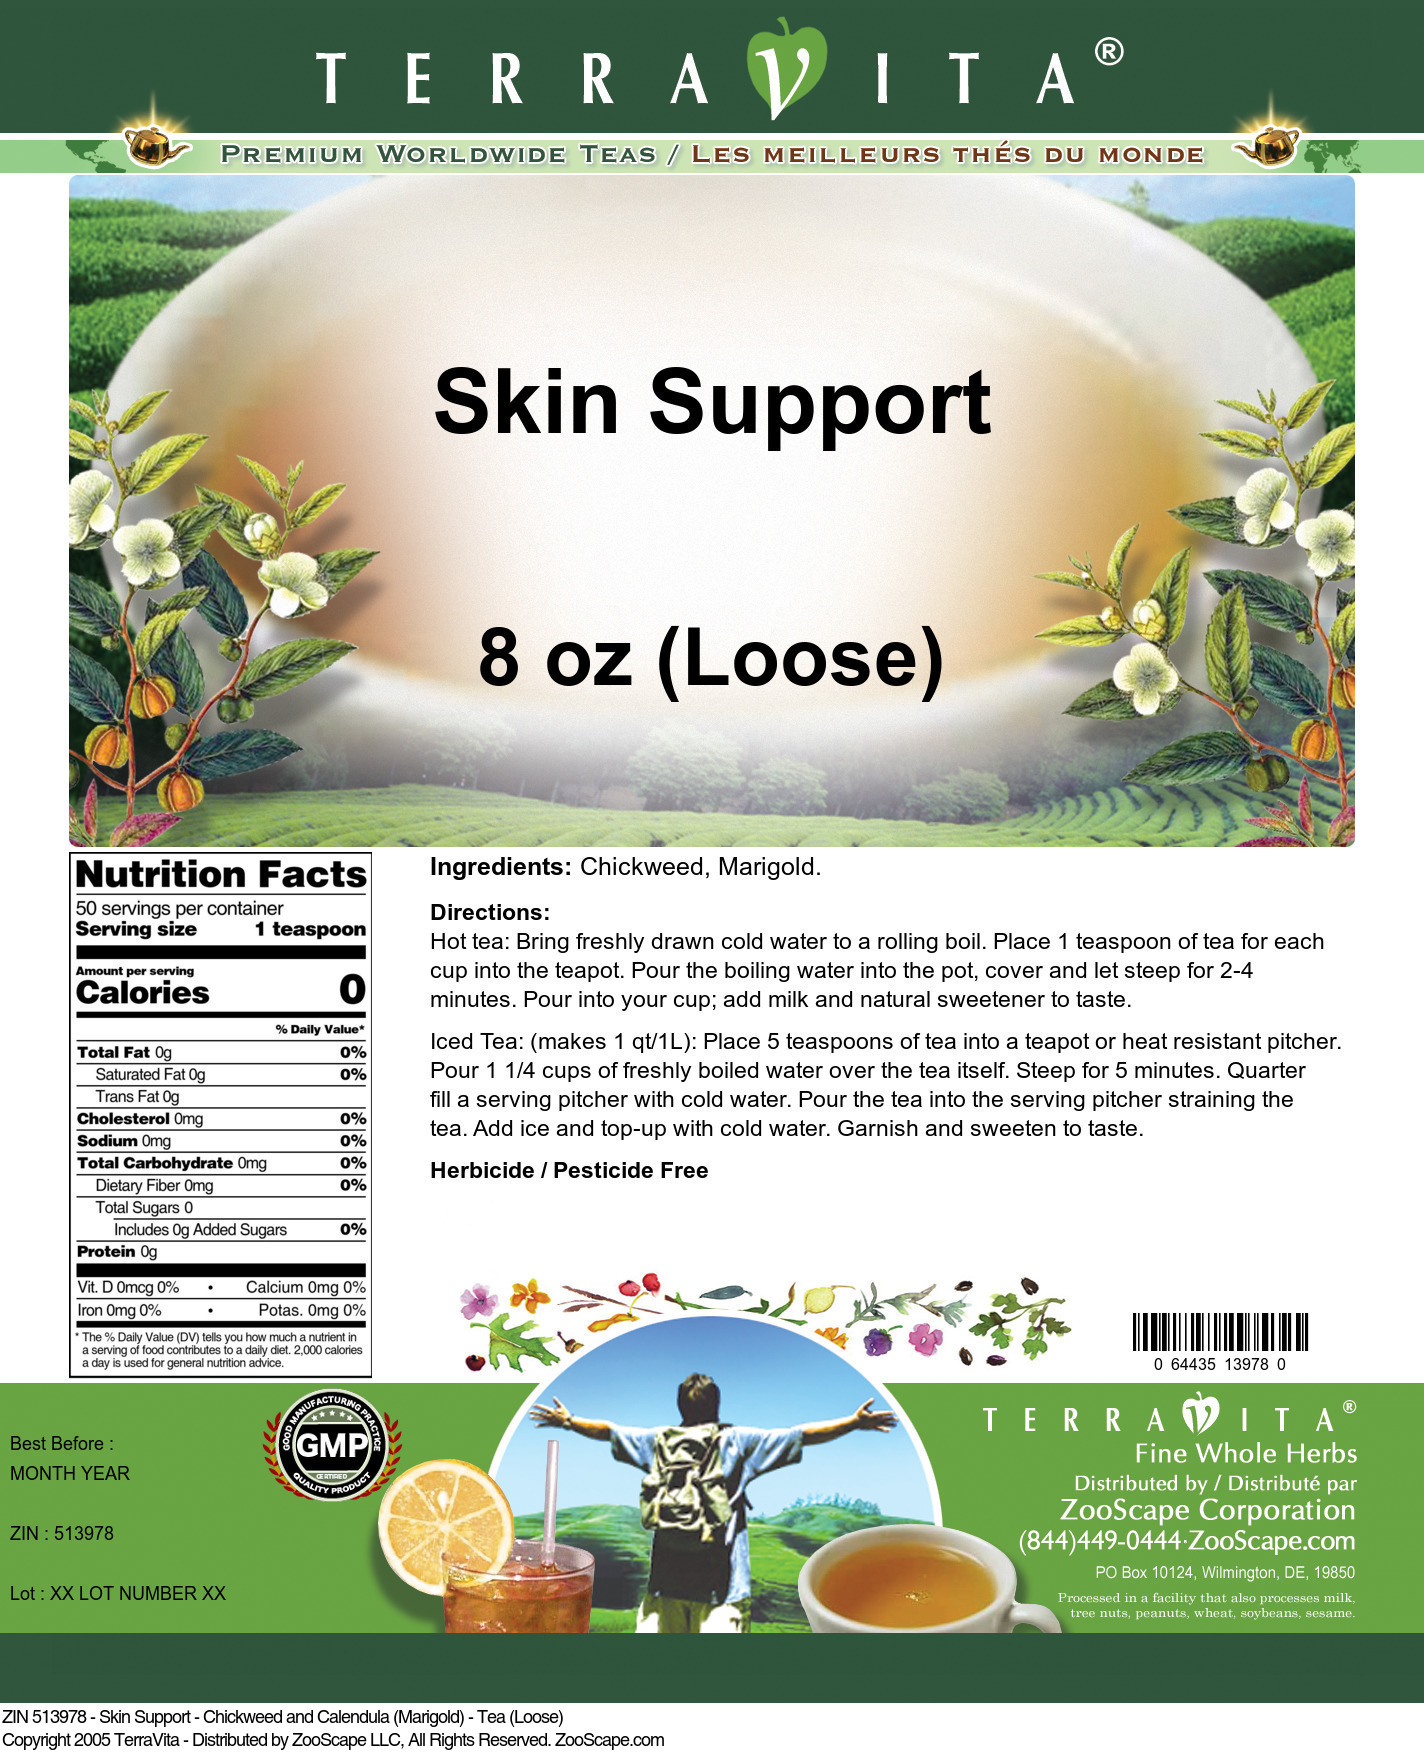 Skin Support - Chickweed and Calendula (Marigold) - Tea (Loose) - Label